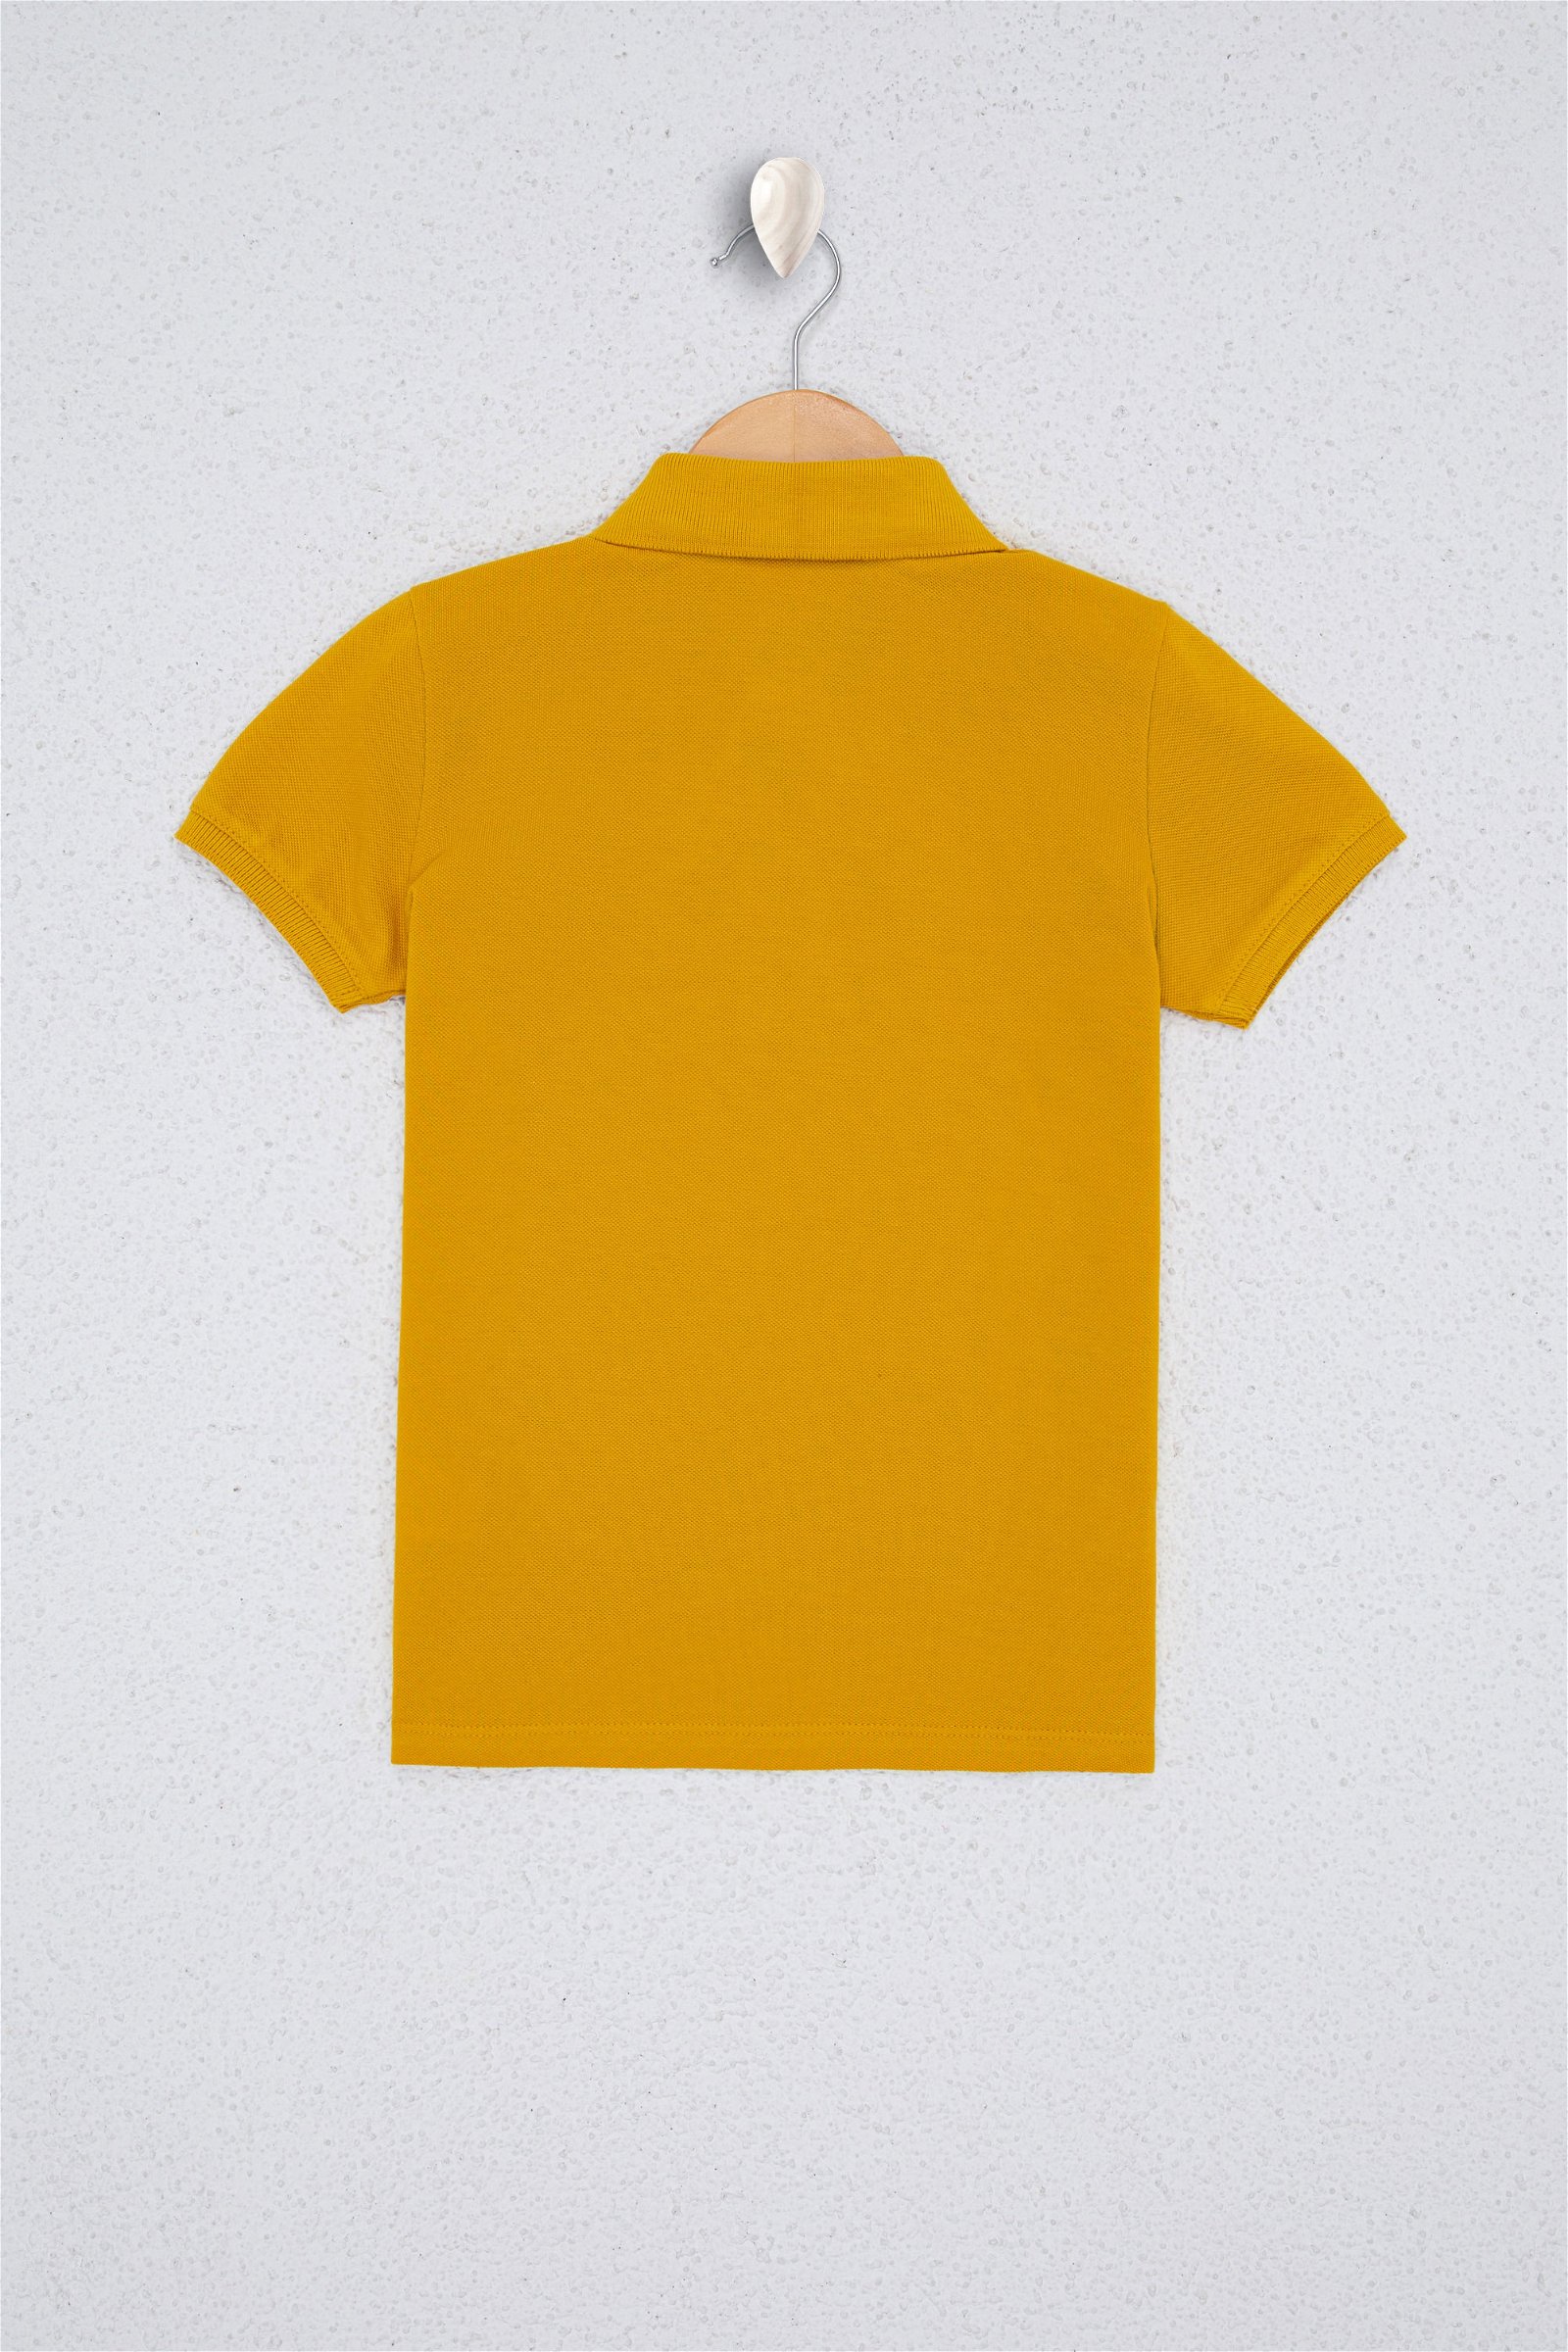 تی شرت یقه پولو زرد تیره  استاندارد فیت آستین کوتاه پسرانه یو اس پولو | US POLO ASSN